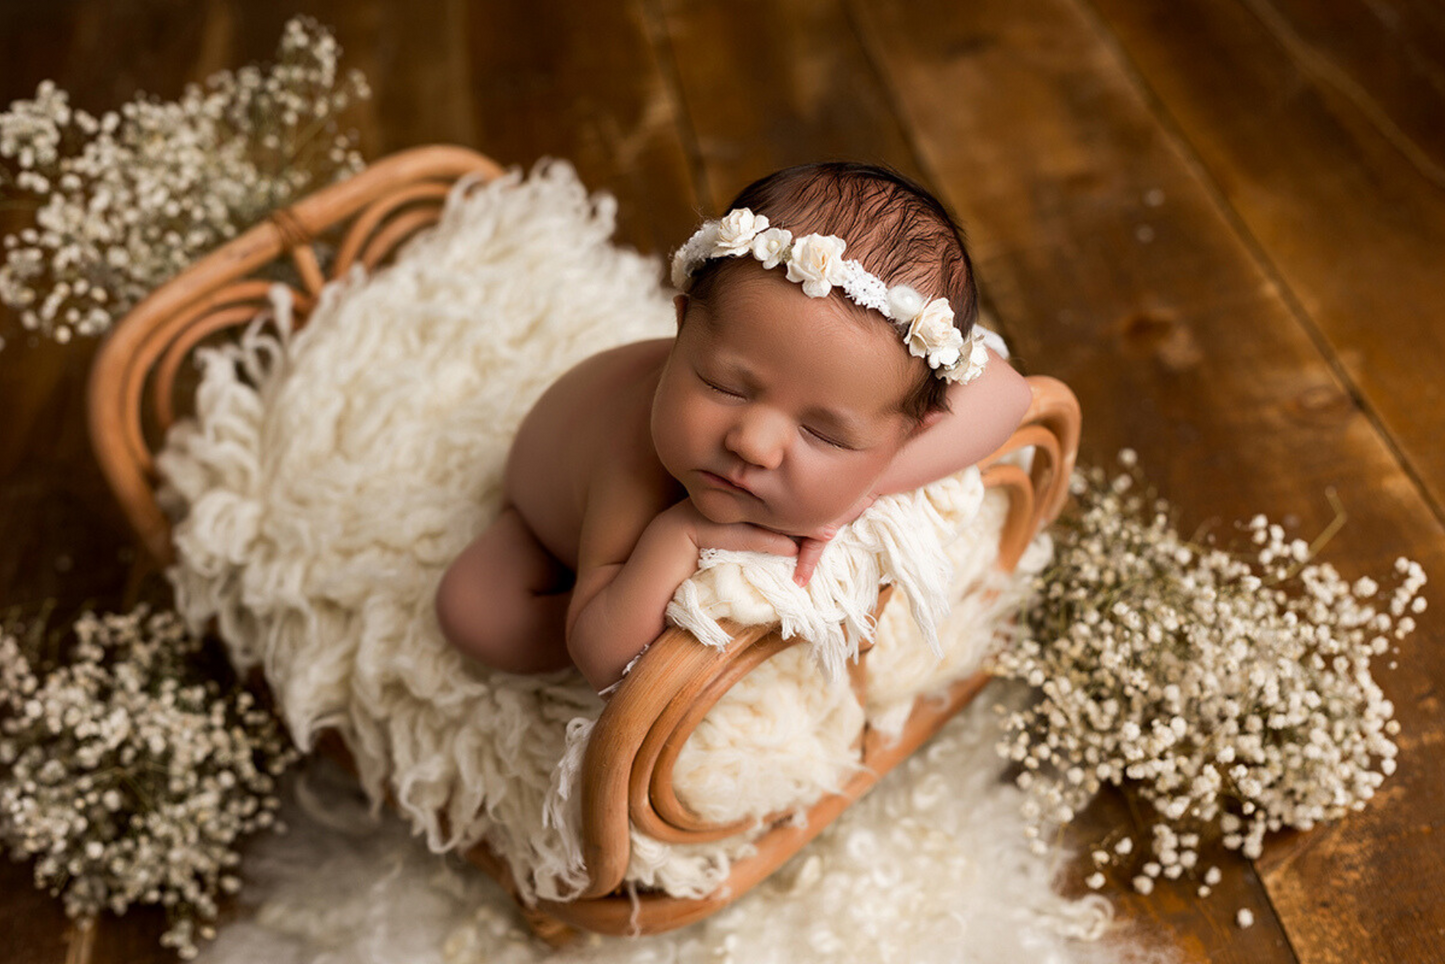 Cherubic newborn in lace dress, cradled in a rustic rattan bed with cream pillows.